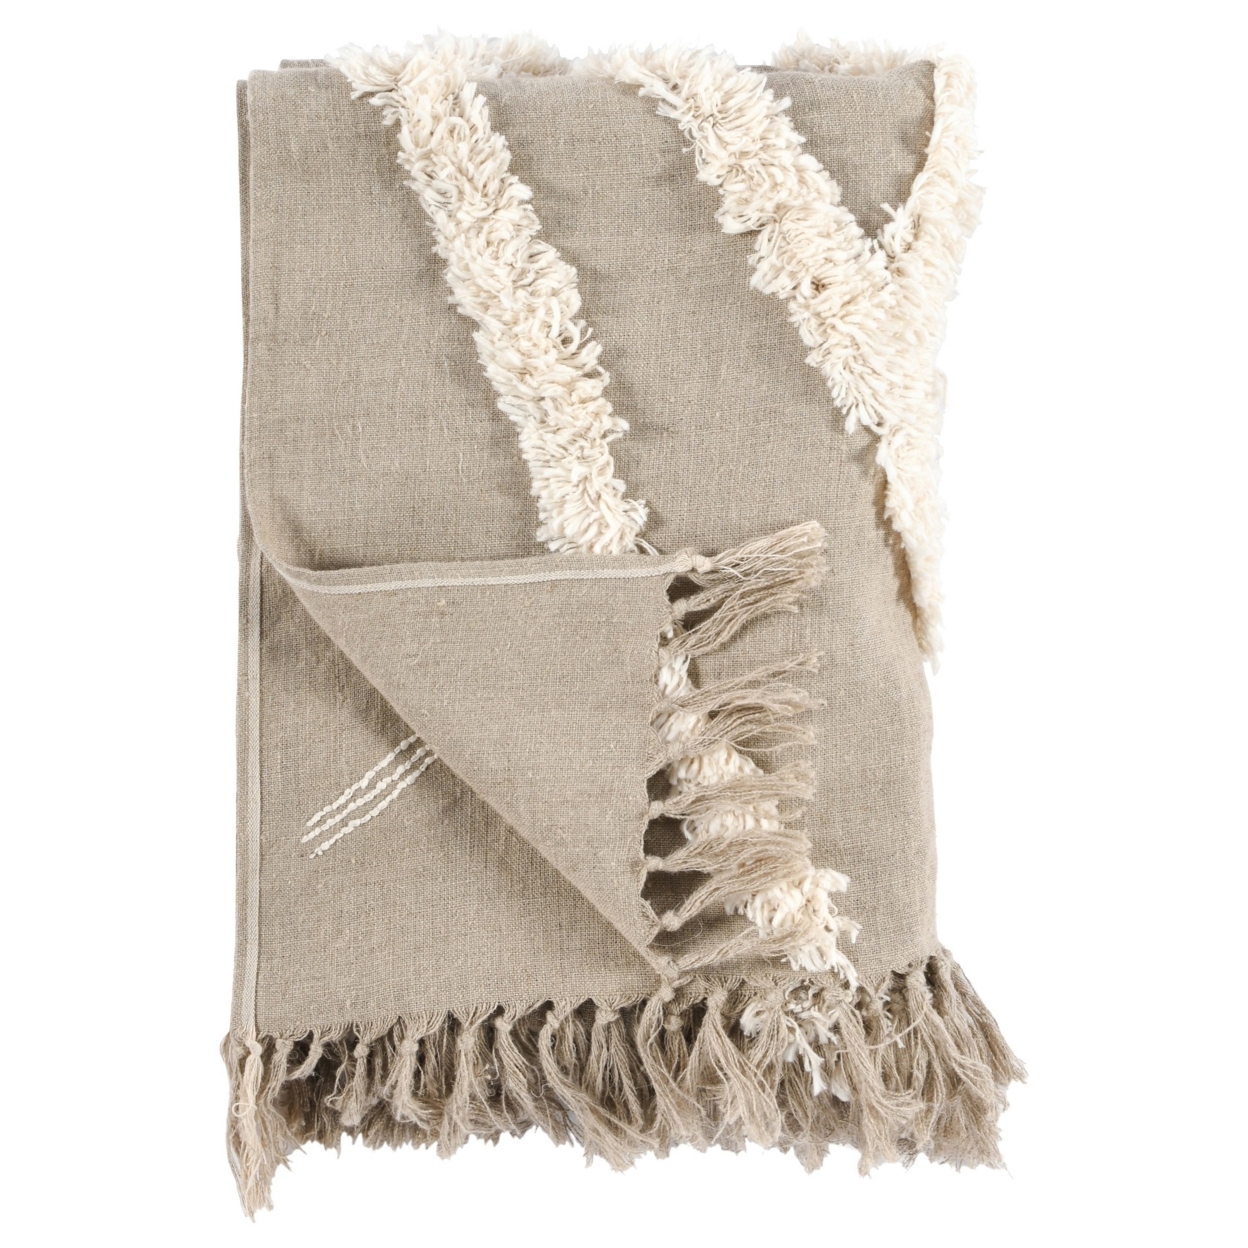 50 X 70 Linen Throw Blanket, Tufted Stripes, Woven Tassels, Beige, Ivory- Saltoro Sherpi